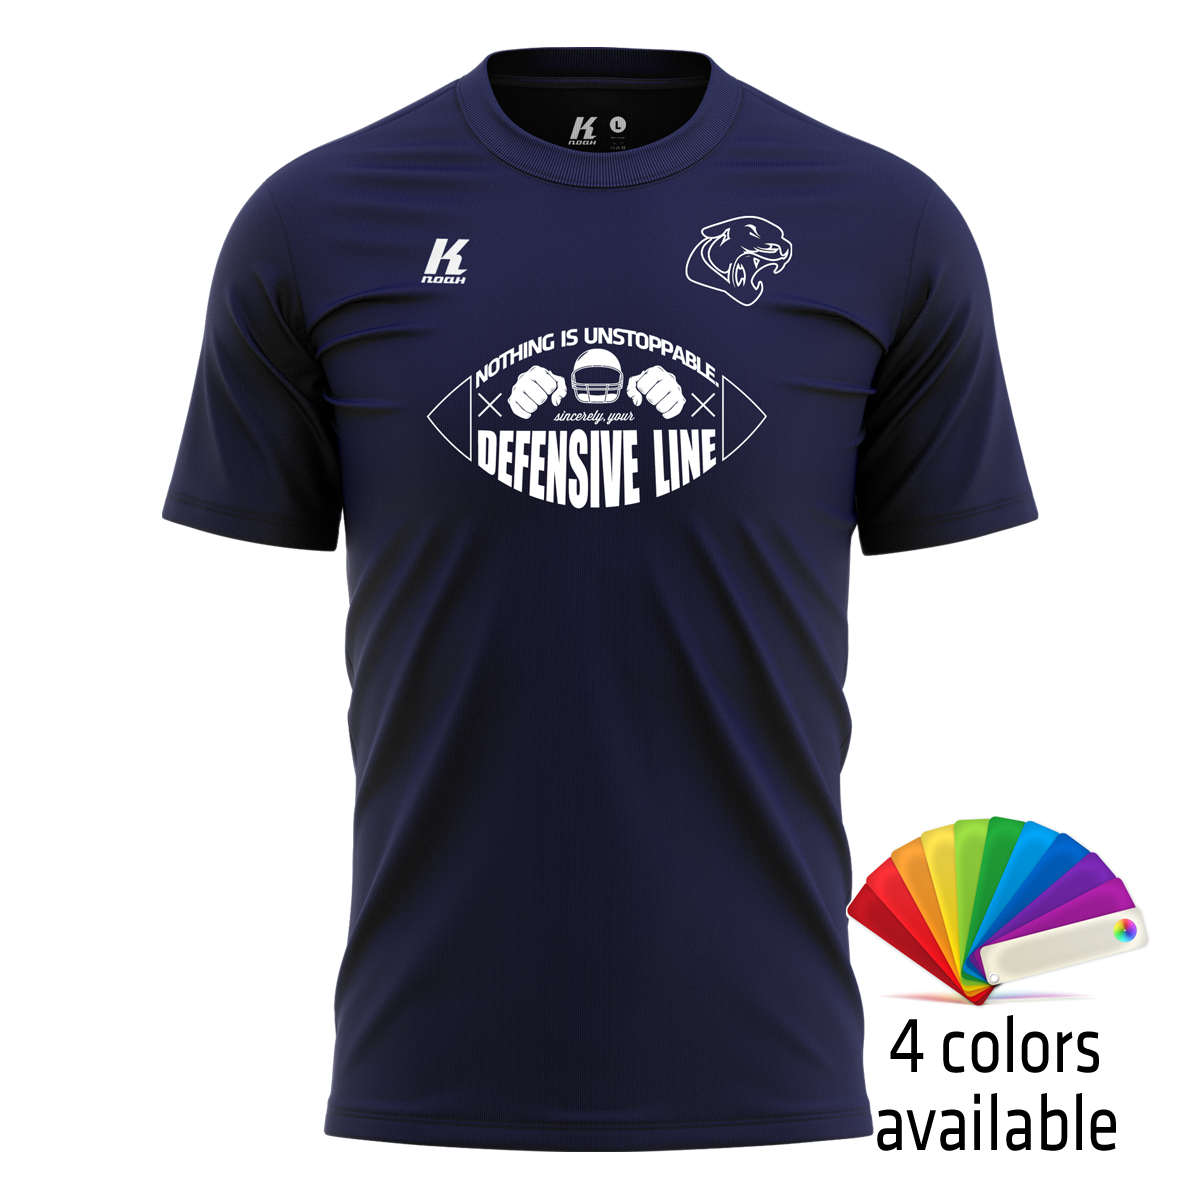 Cougars Footballmary T-Shirt "Devensive Line"